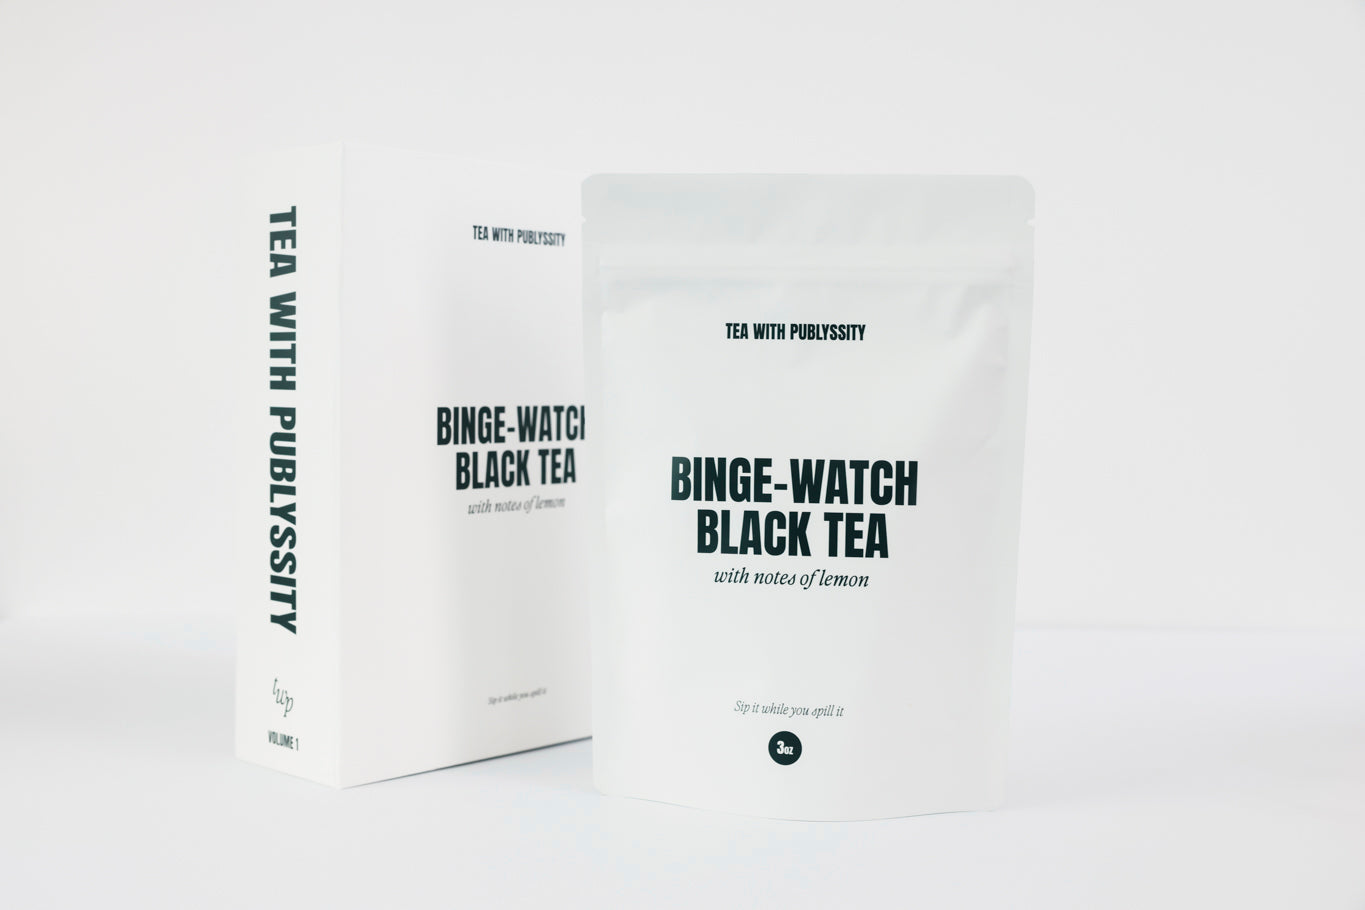 Binge-Watch Black Tea